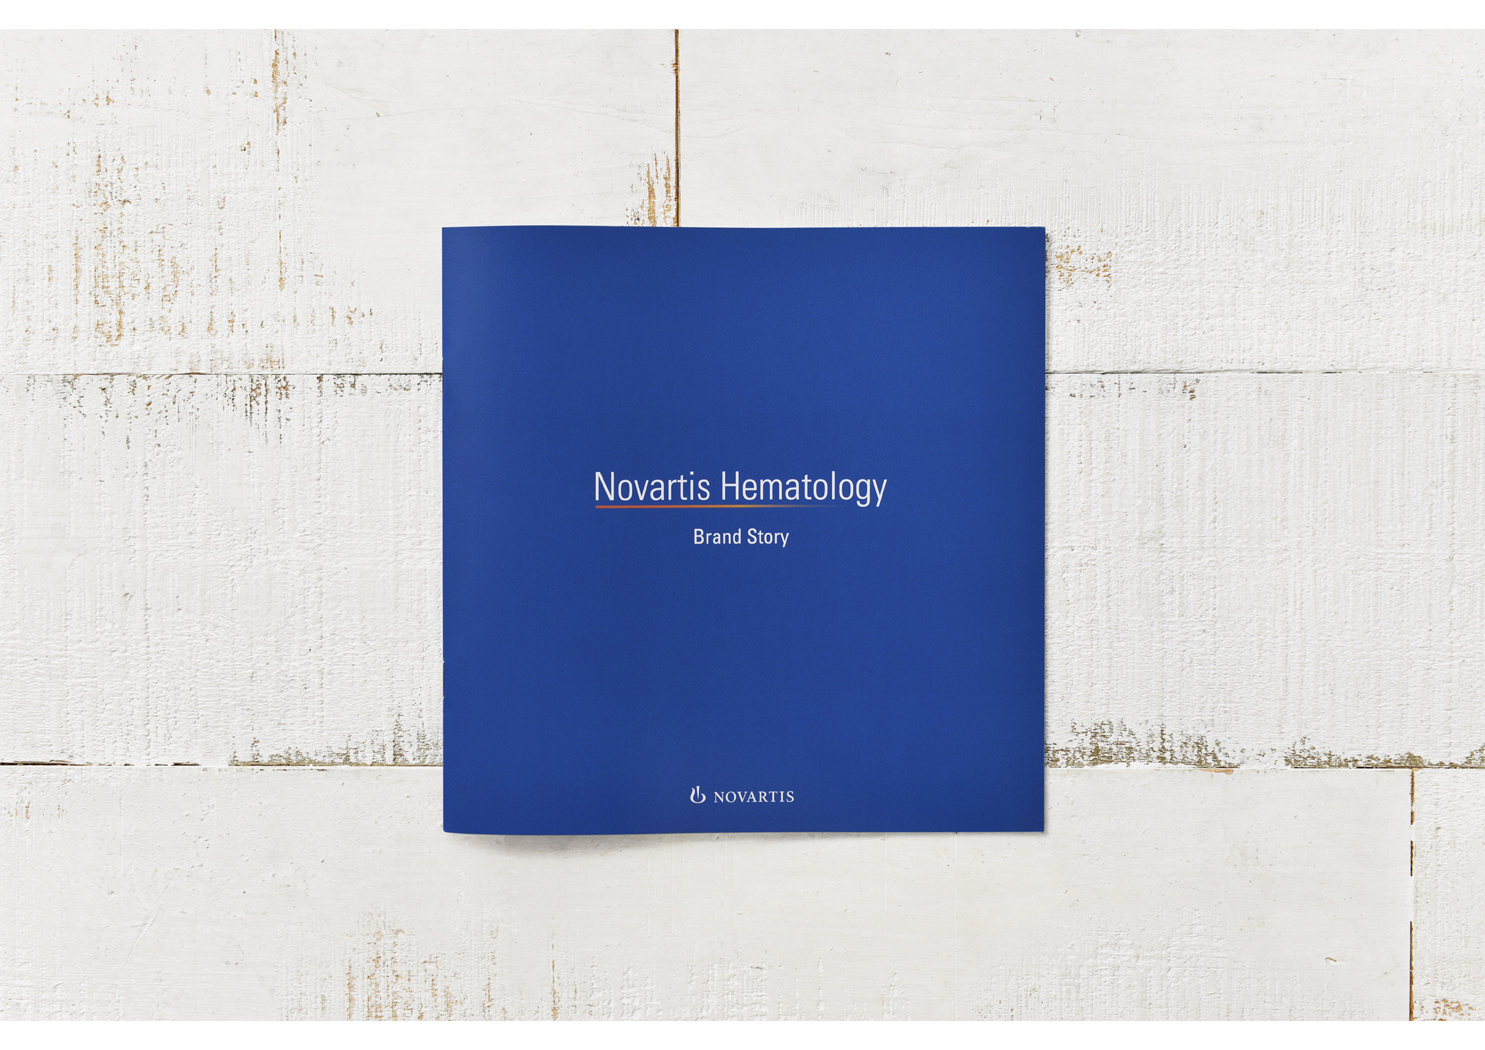 NOVARTIS “Novartis Hematology” pamphlet